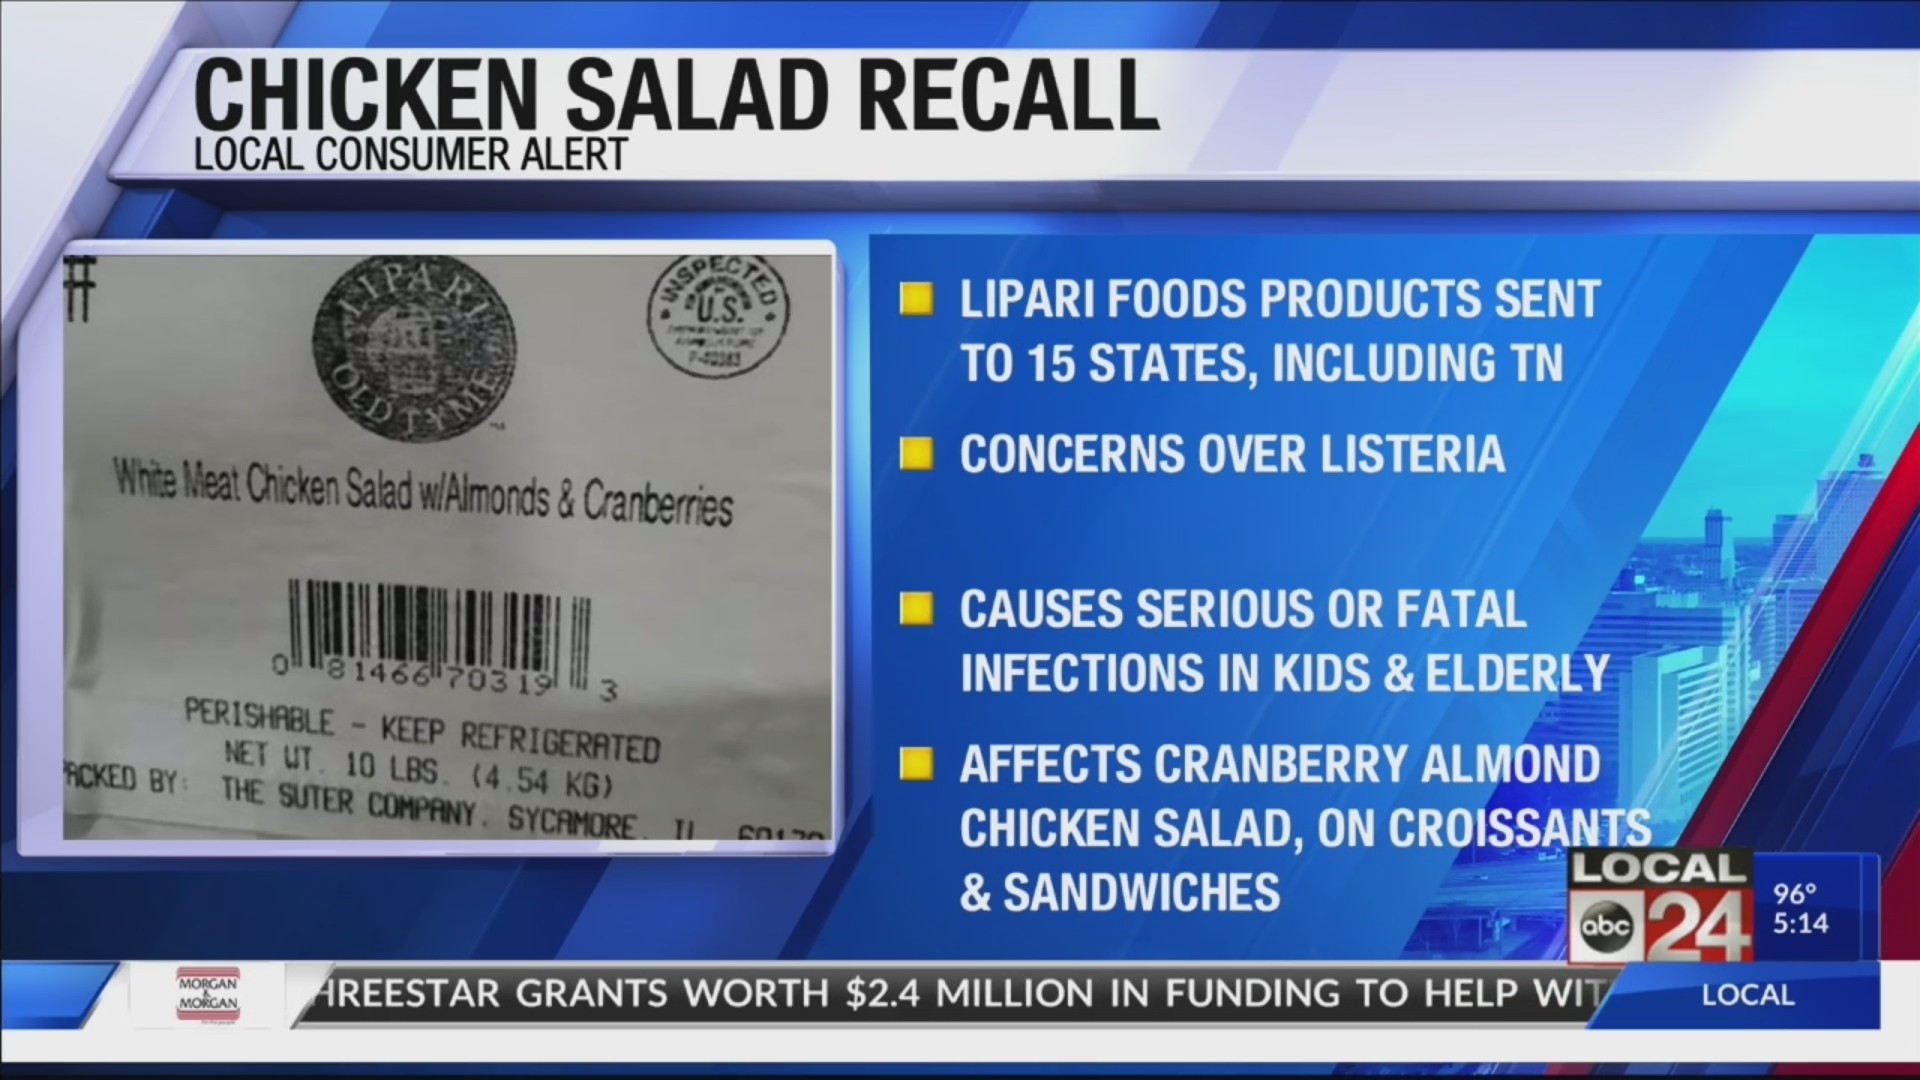 Lipari Foods recalls chicken salad products over Listeria concerns